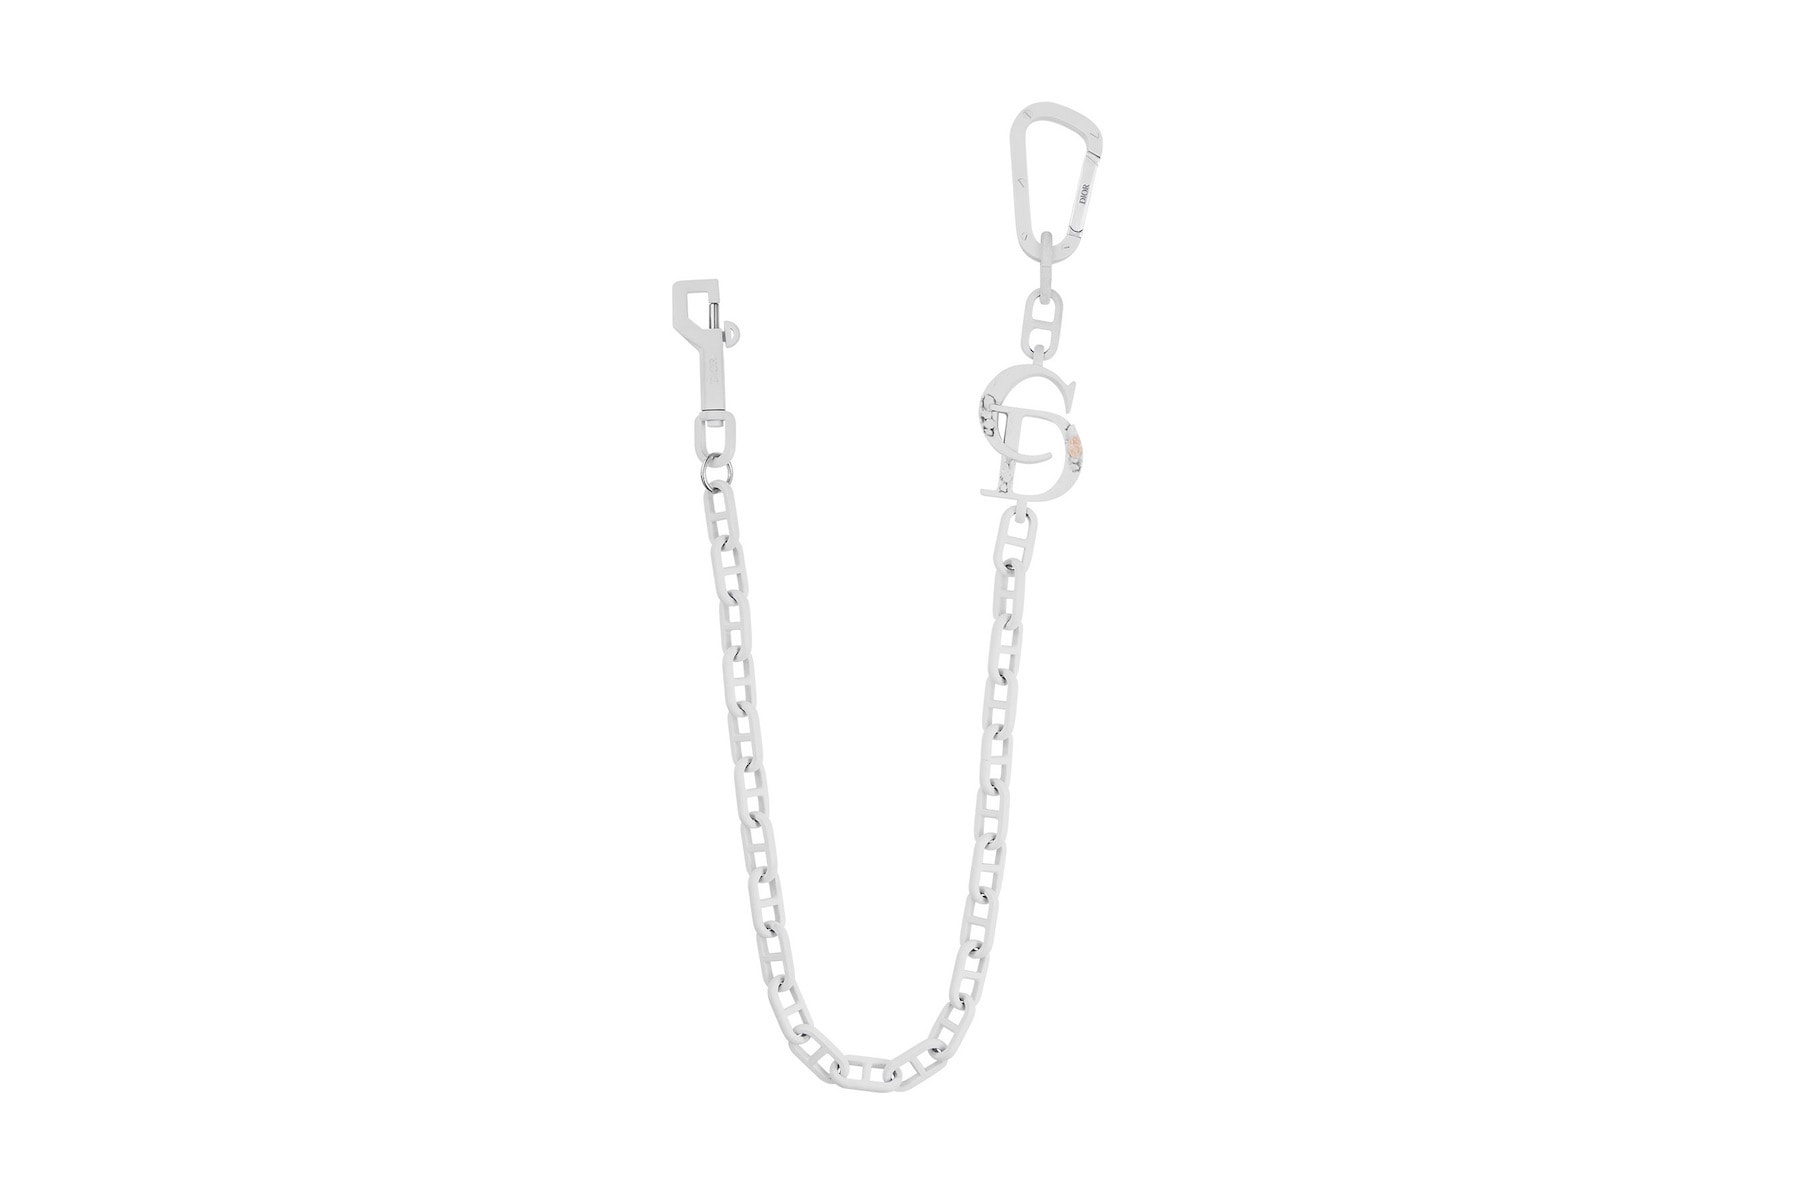 Dior Kim Jones Daniel Arsham Jewelry SS20 Drop Collection Bracelet Necklace